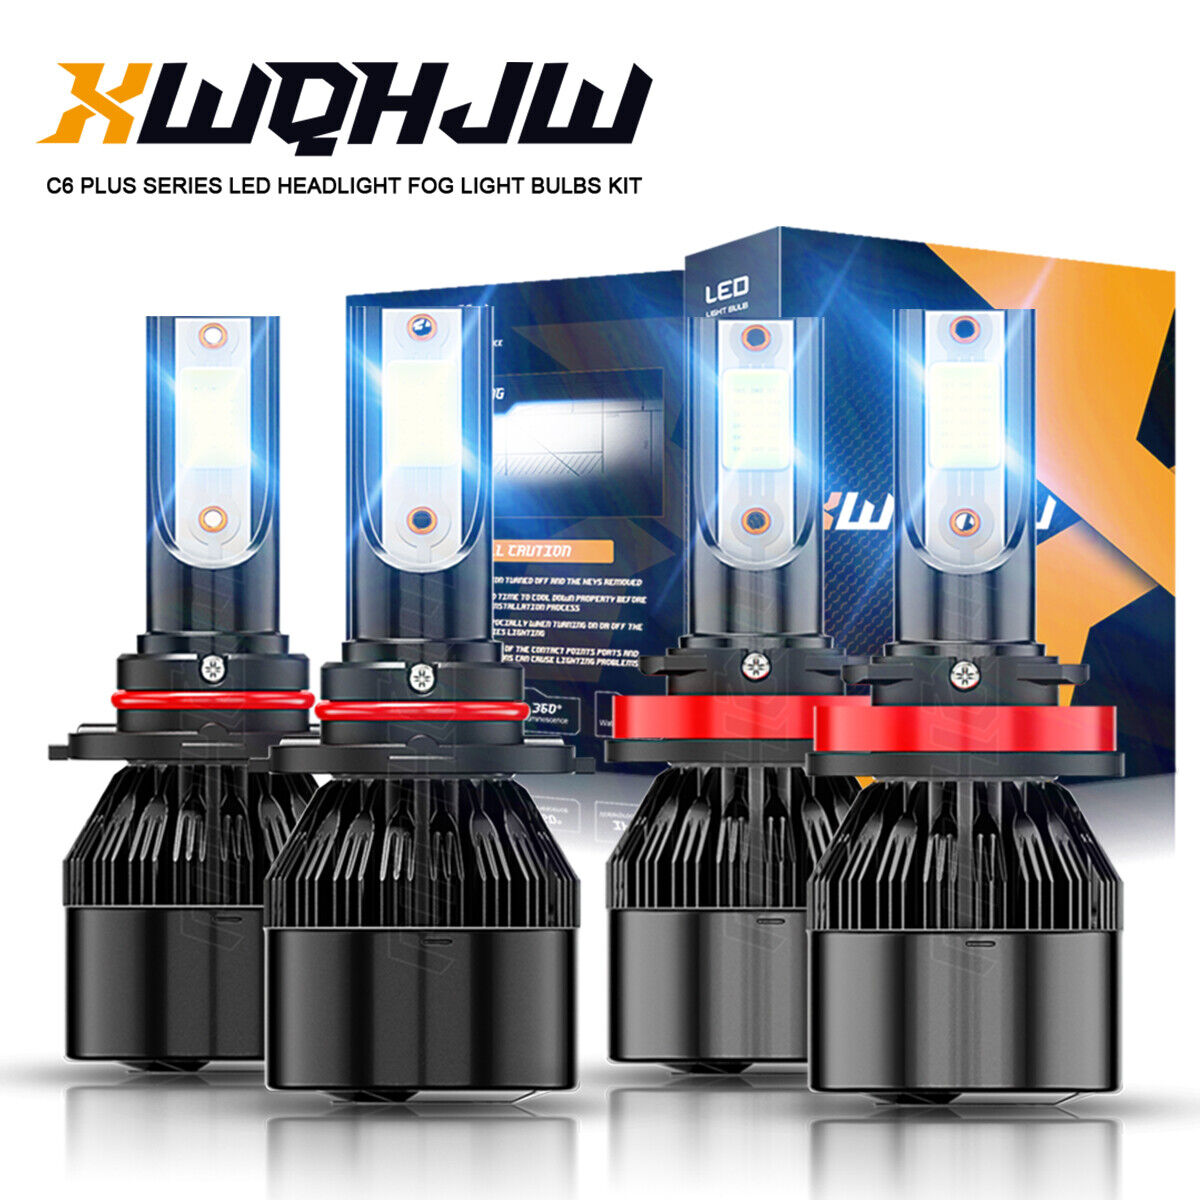 XWQHJW 4-Side LED Headlight Bulbs Kit 9005 H11 High Low Beam Bright Cool White